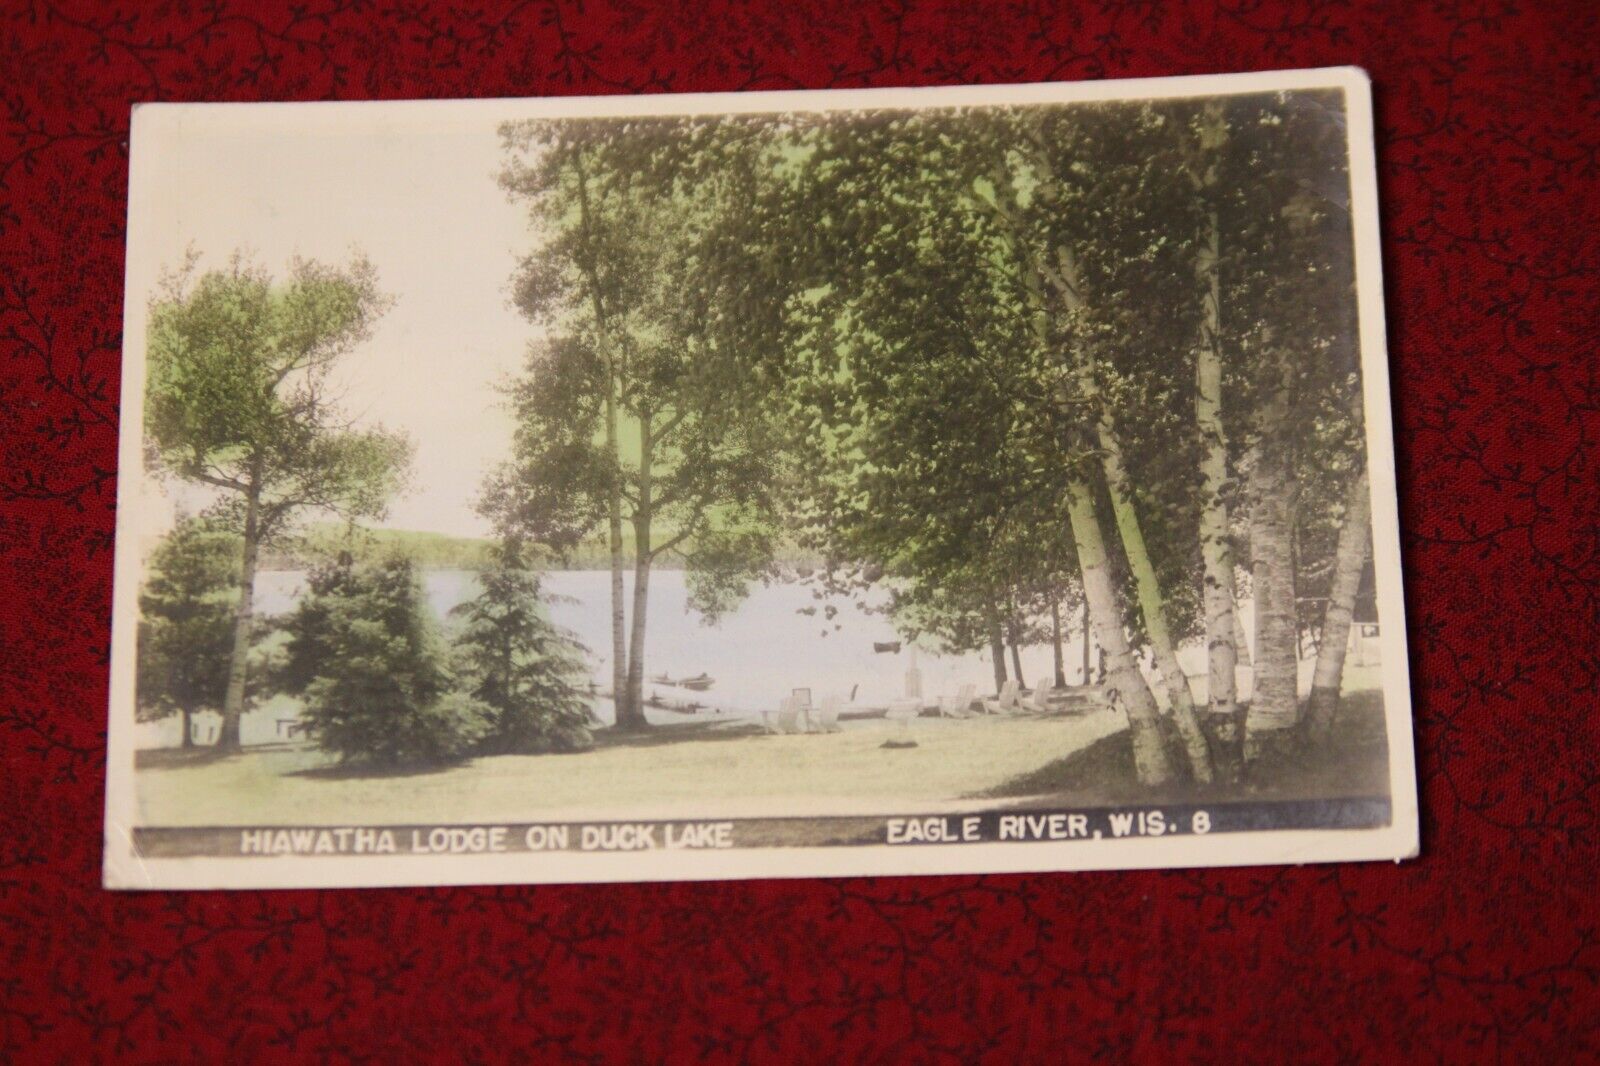 Hiawatha Lodge on Duck Lake, Eagle River Wisconsin Postcard - Real Photo RPPC